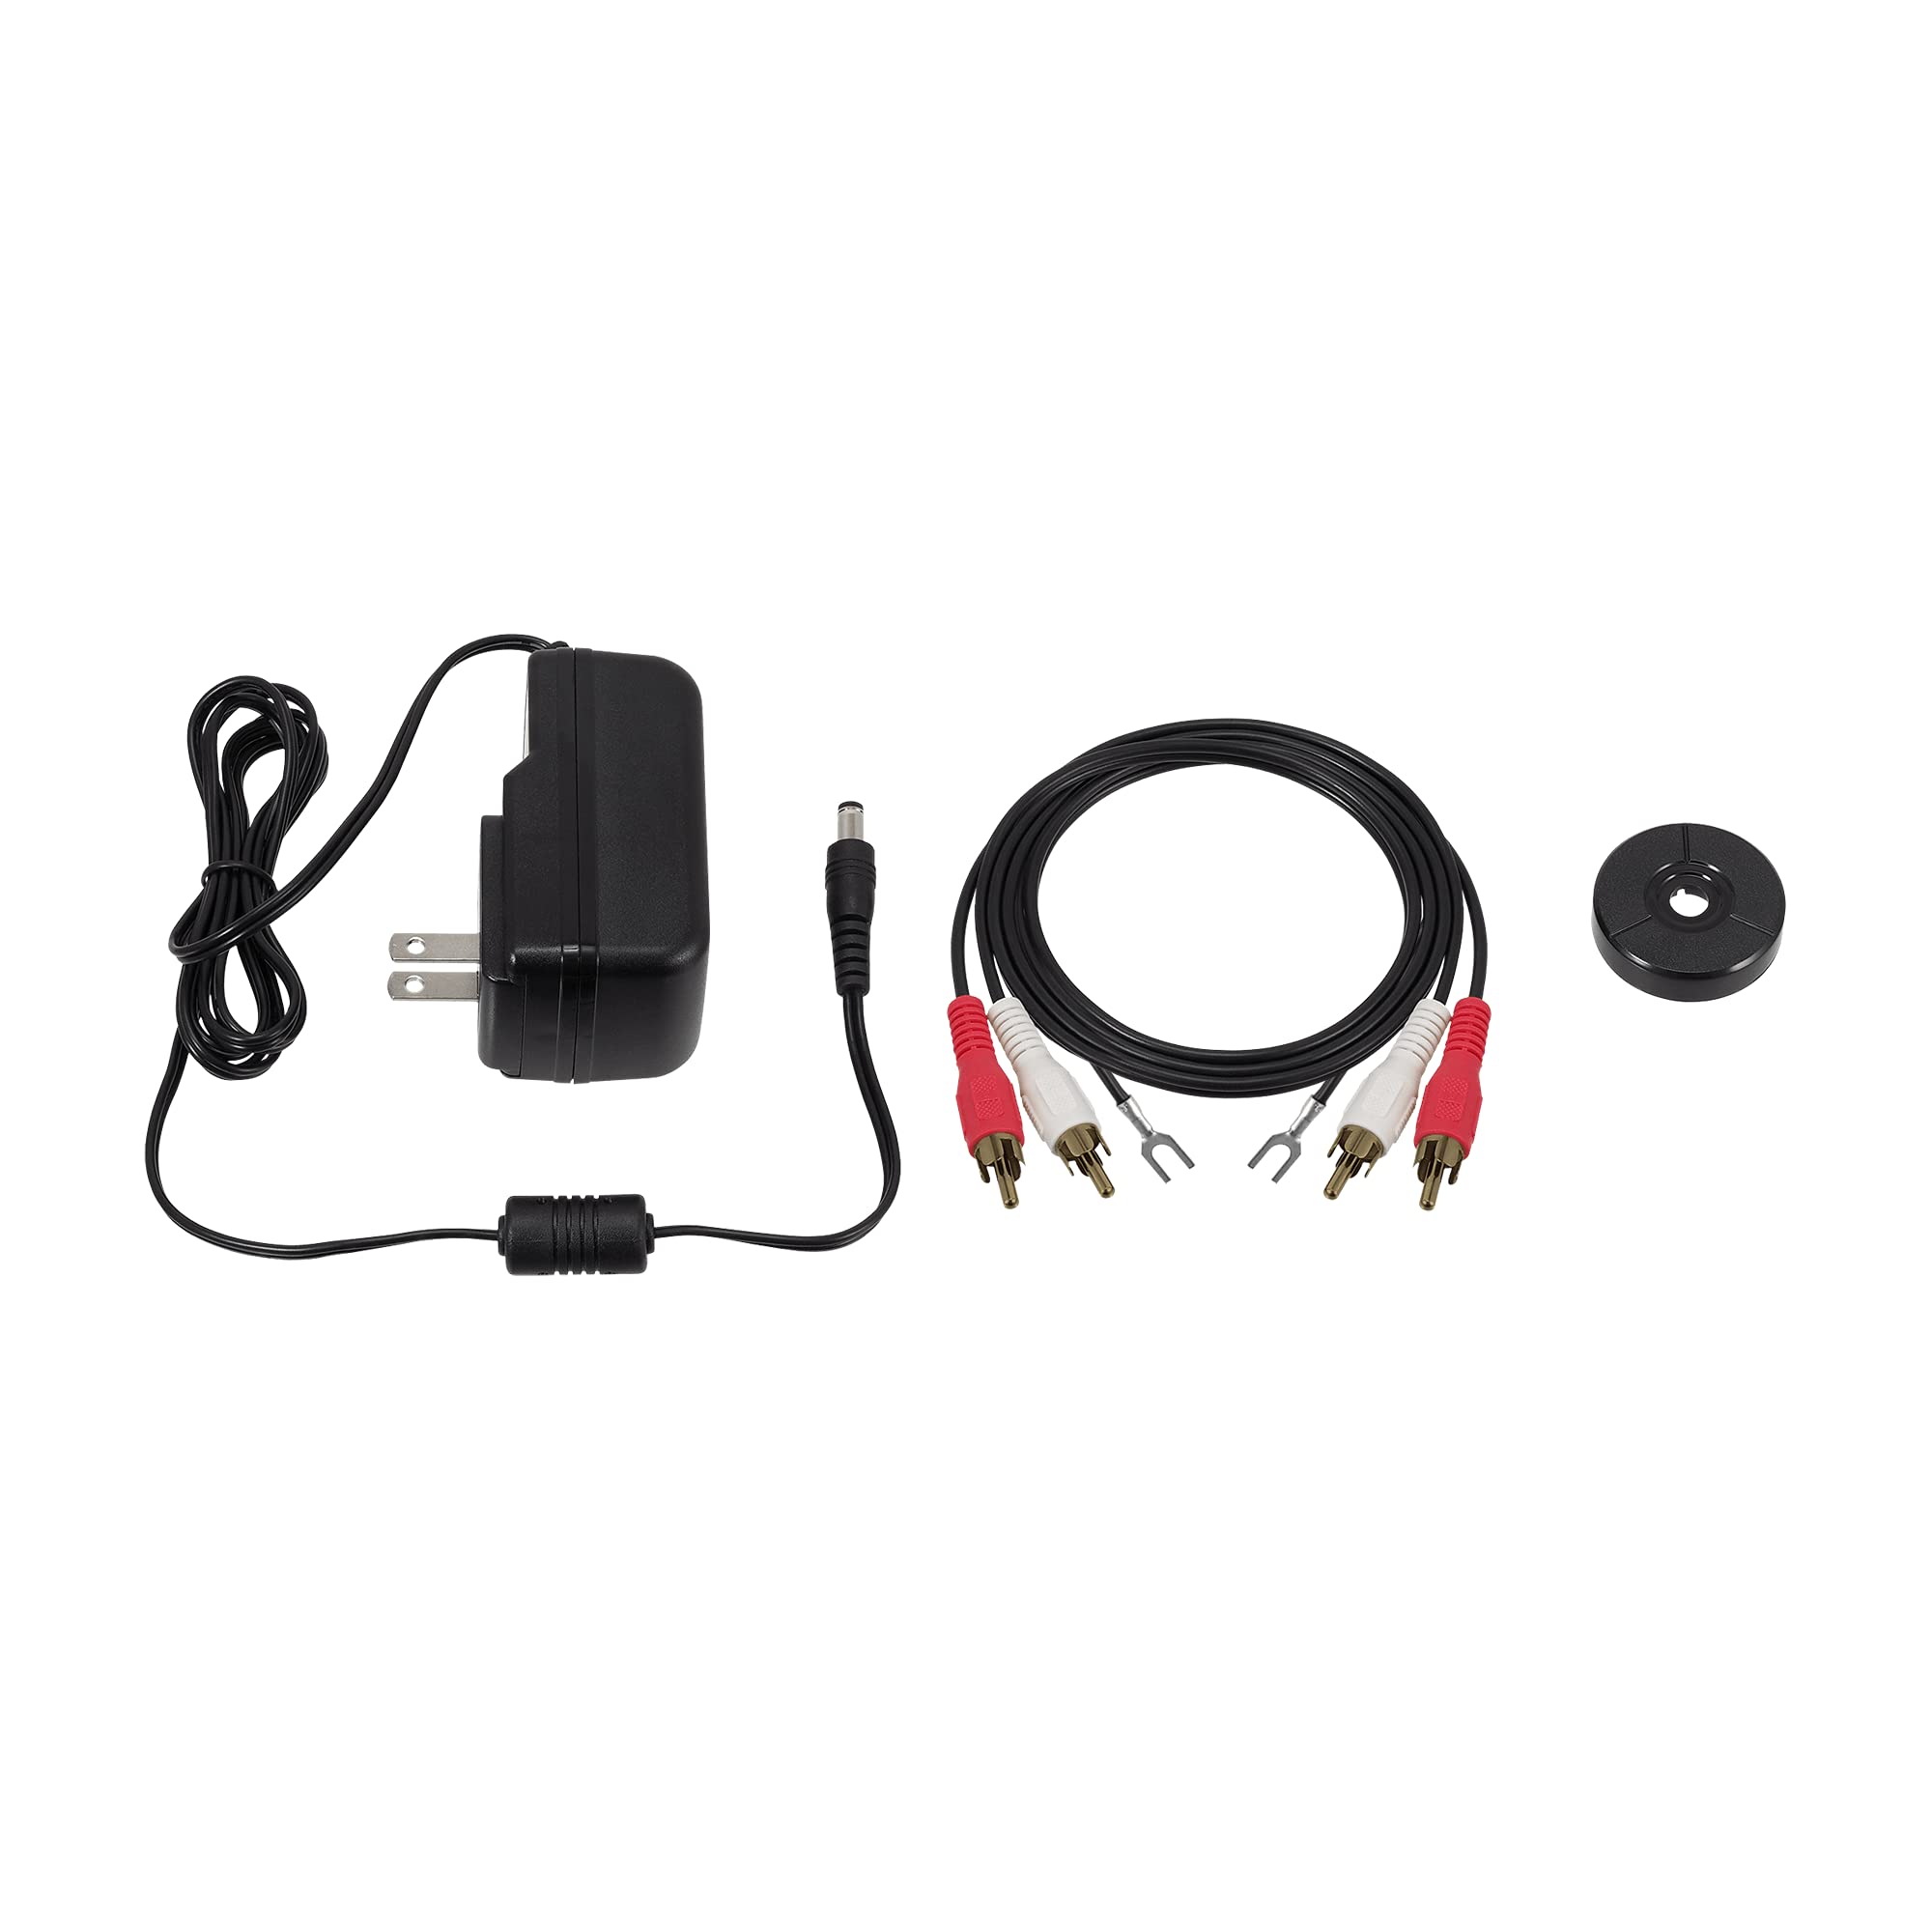 Audio-Technica AT-LP120XUSB-BK Direct-Drive Turntable (Analog & USB), Fully Manual, Hi-Fi, 3 Speed, Convert Vinyl to Digital, Anti-Skate and Variable Pitch Control Black